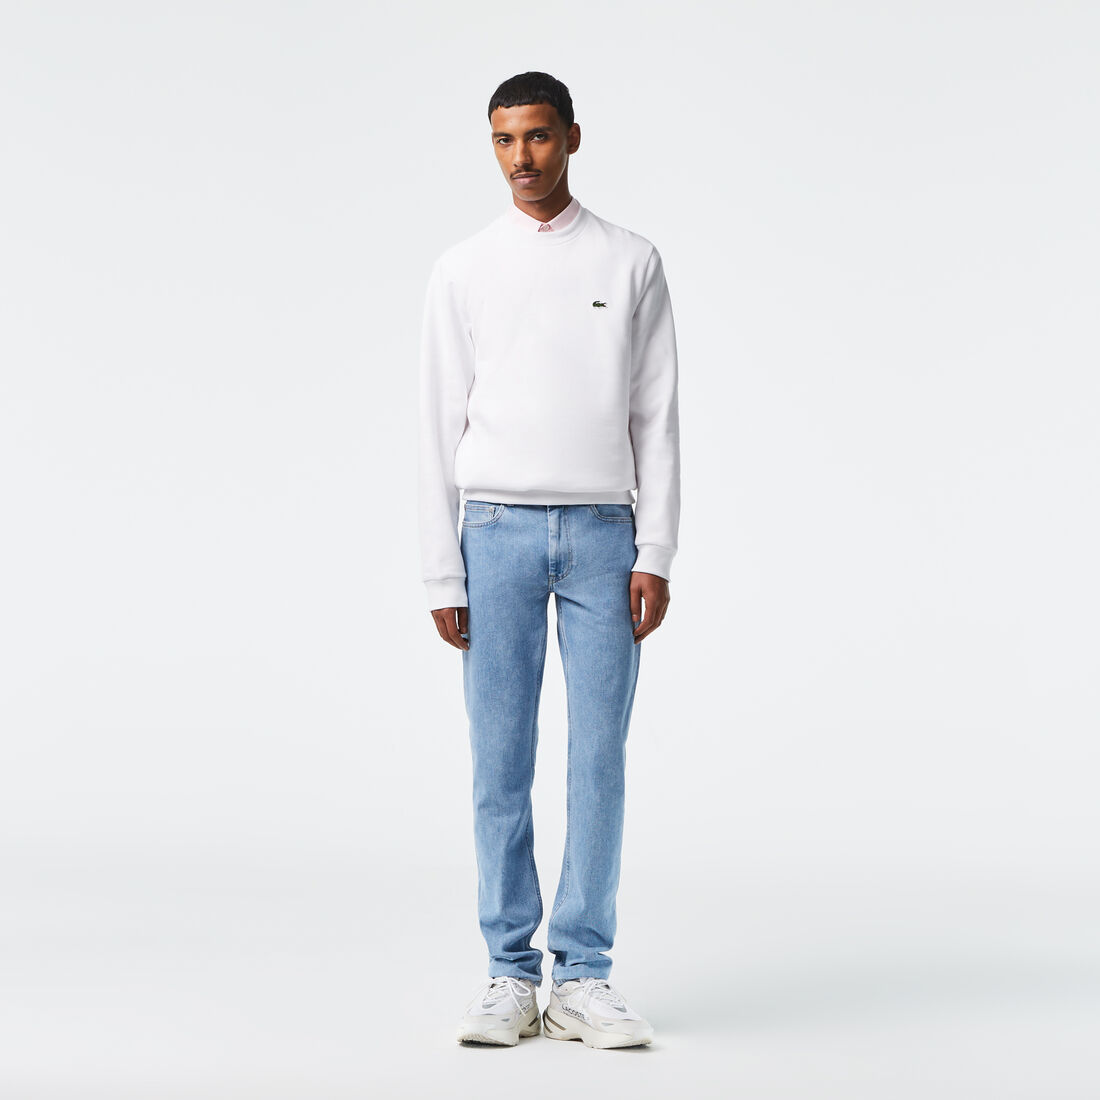 Lacoste Slim Fit Stretch Baumwoll Denim Jeans Herren Blau | QVLD-56428